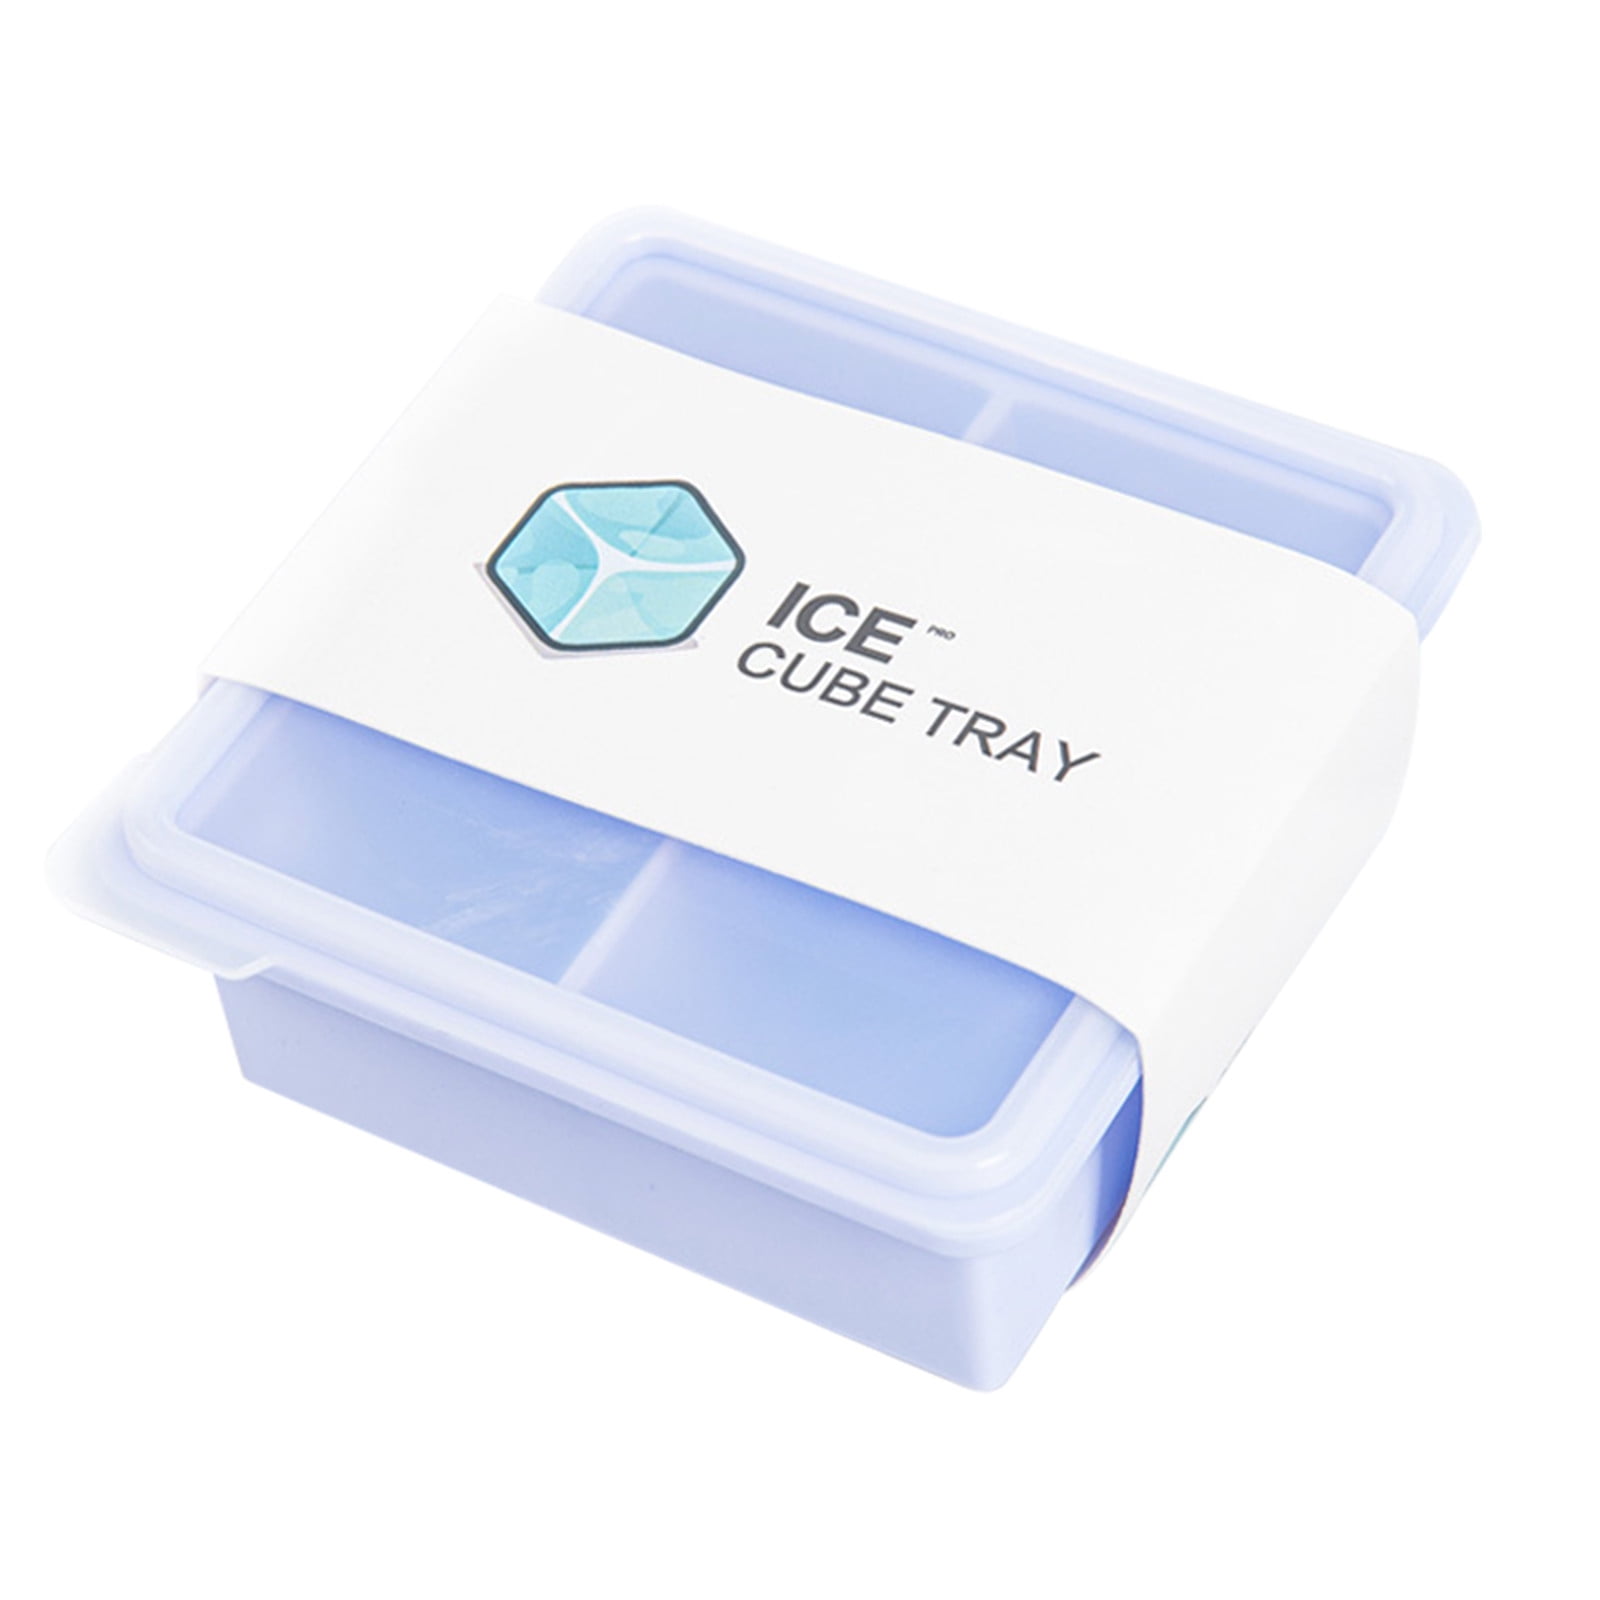 Jikolililili Extra Large Ice Cube Tray with Lid | BPA Free Jumbo Silicone Ice Cube Trays with Lid for Freezer | Makes 6 Large Square Ice Cube Mold for